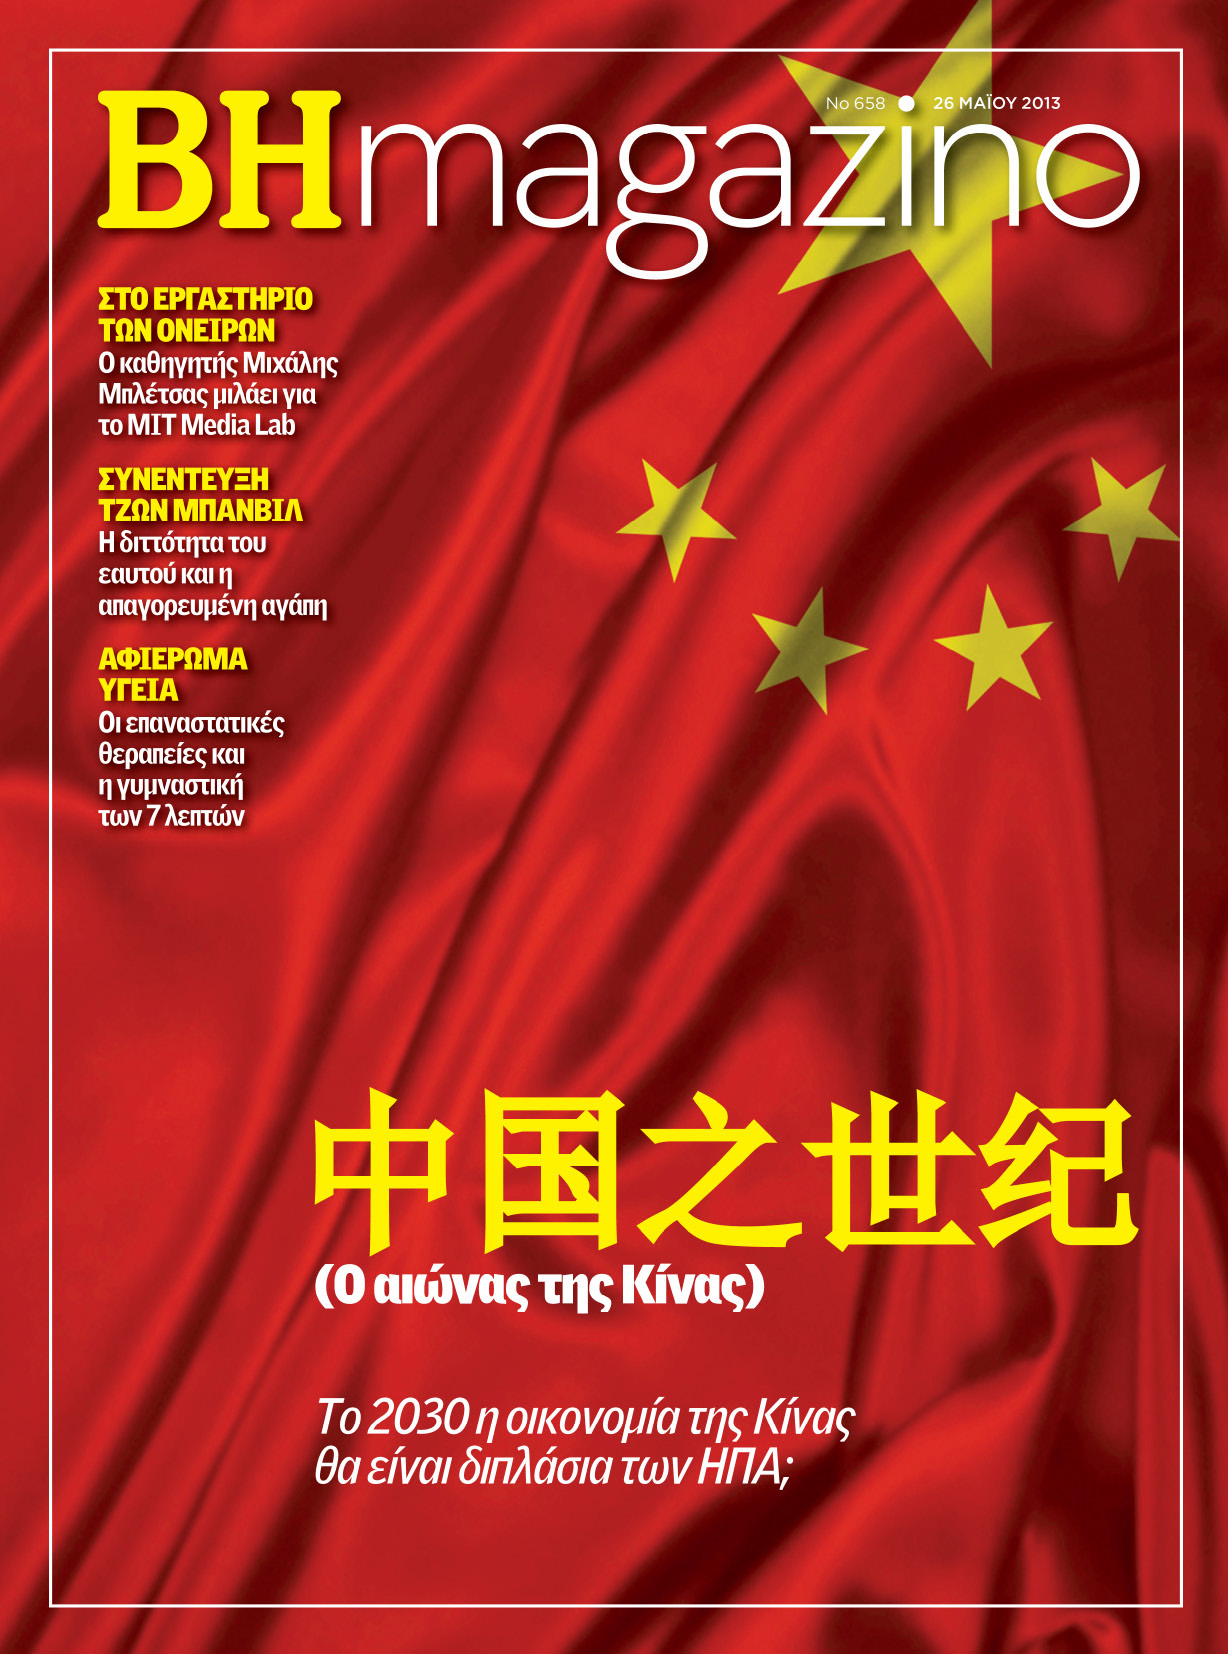 BHmagazino: Ο αιώνας της Κίνας